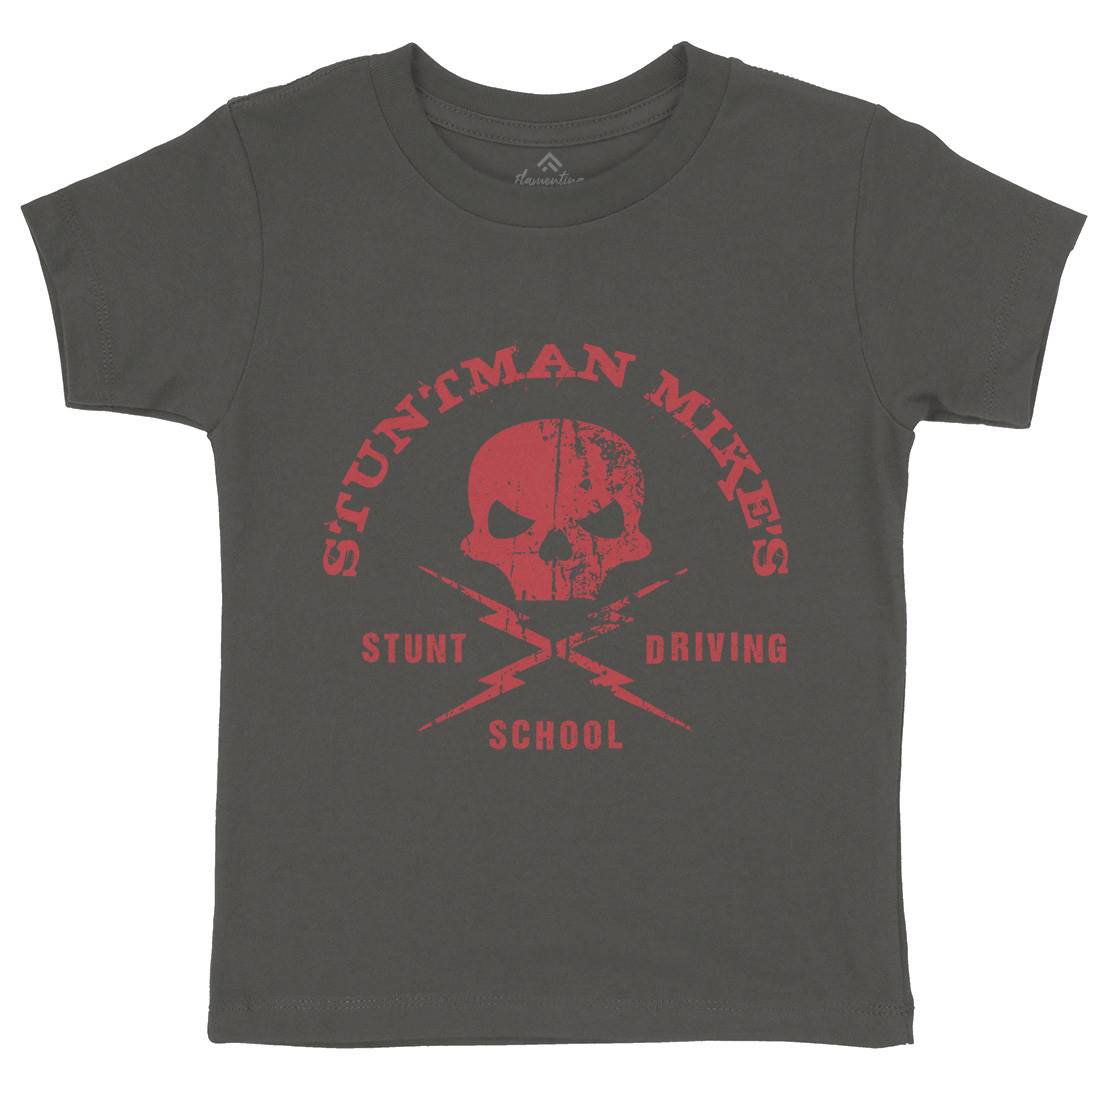 Stuntman Mike Kids Crew Neck T-Shirt Cars D322